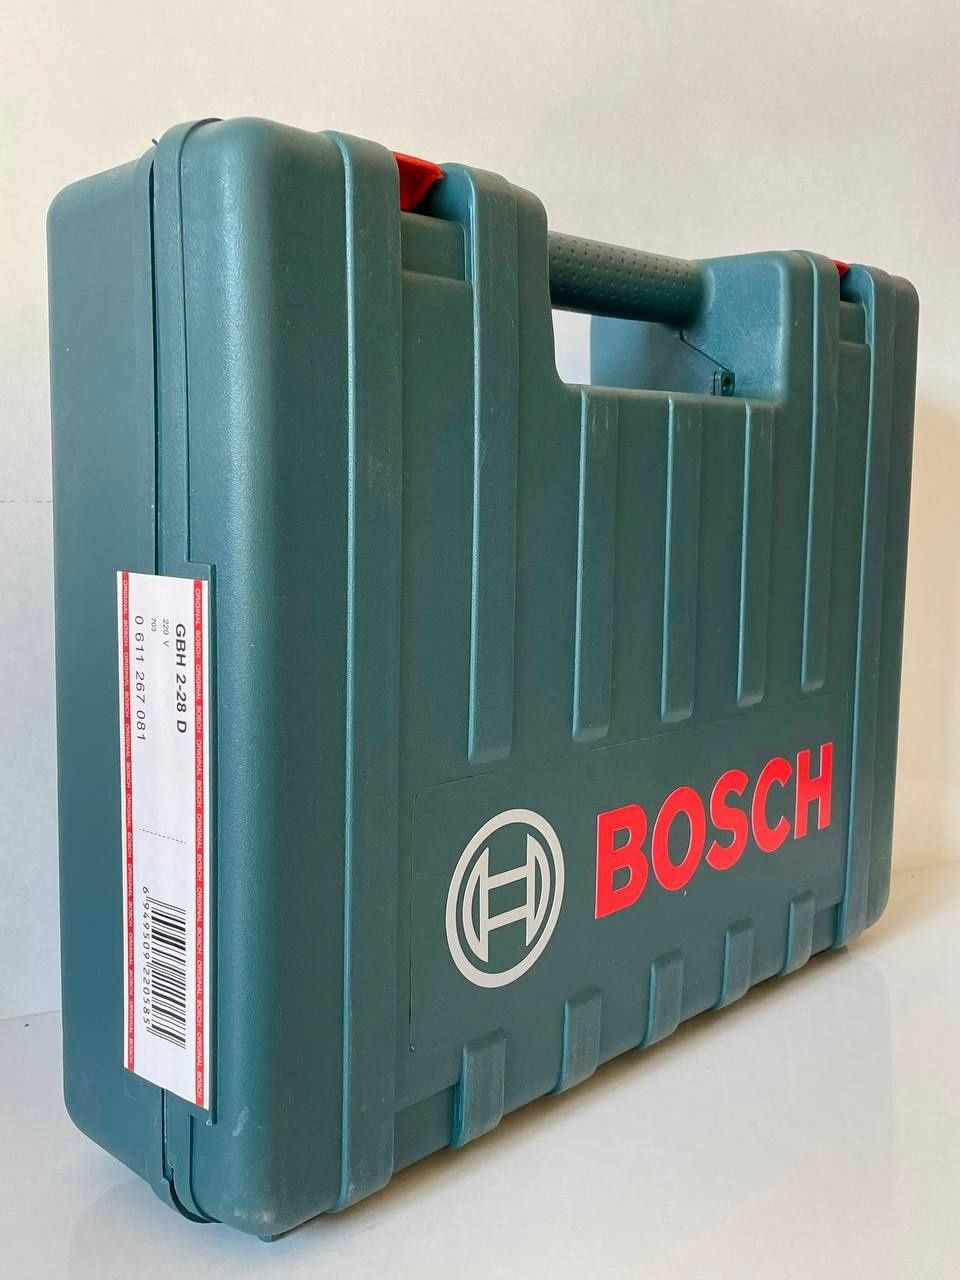 Perfarator Bosch 2.26